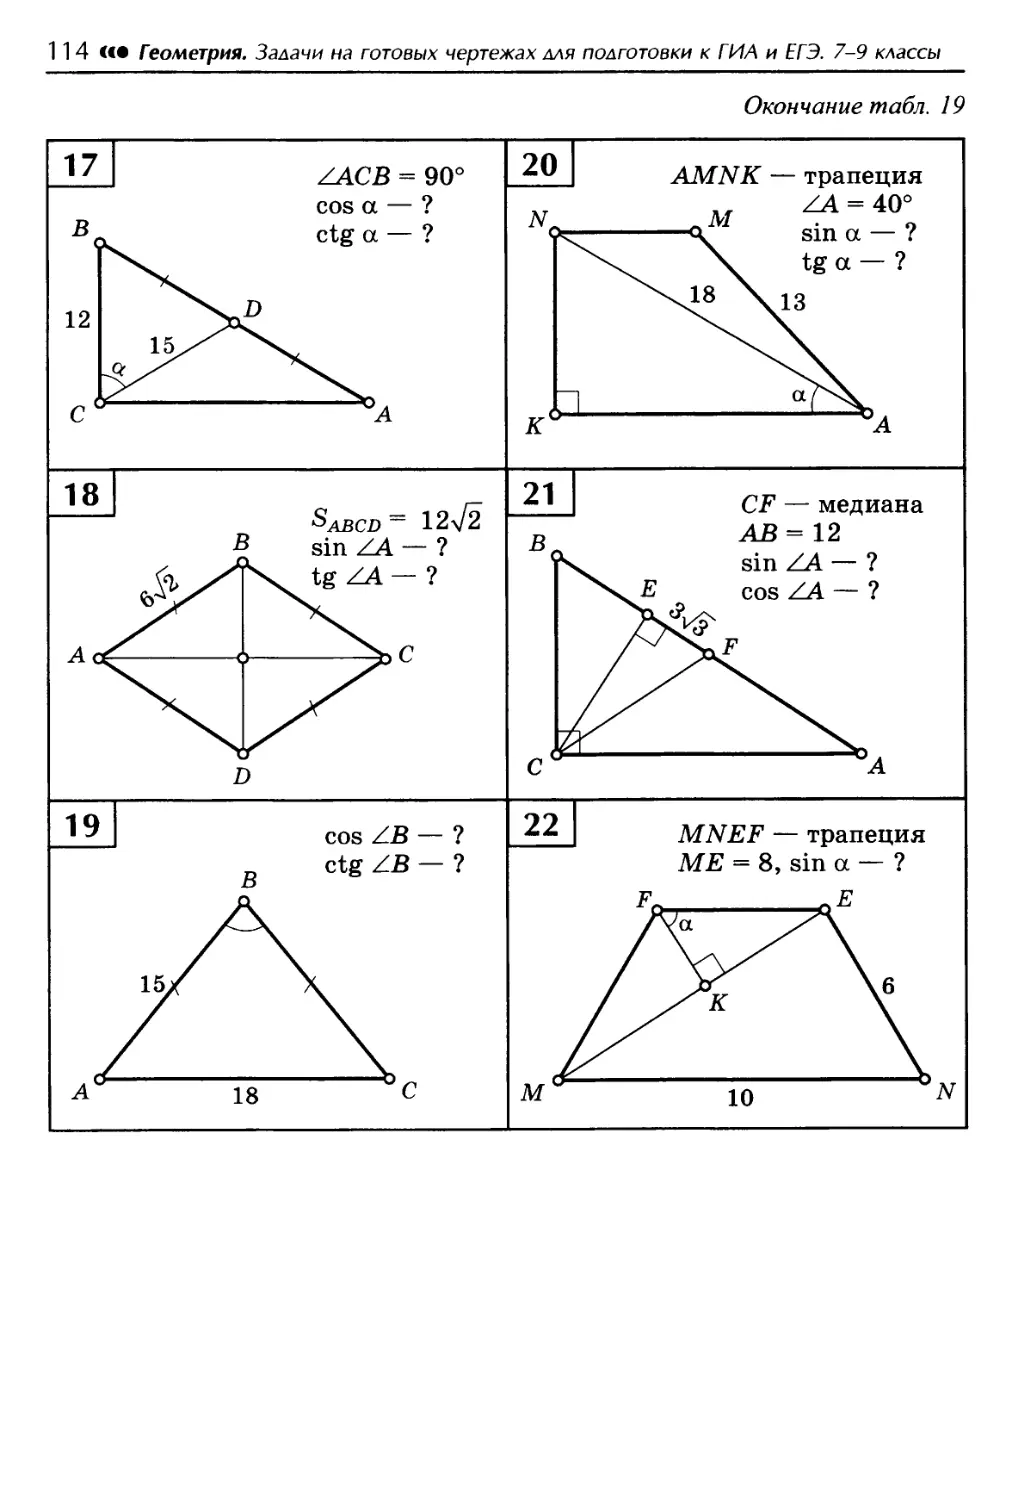 Геометрия на чертежах 7 9. Геометрия чертеж задачи на готовых чертежах 8 класс Атанасян. Задачи на готовых чертежах 7 класс геометрия Атанасян. Балаян 7-9 класс геометрия задачи на готовых чертежах таблица 4. Задачи по геометрии на готовых чертежах 7-9 классы Атанасян.